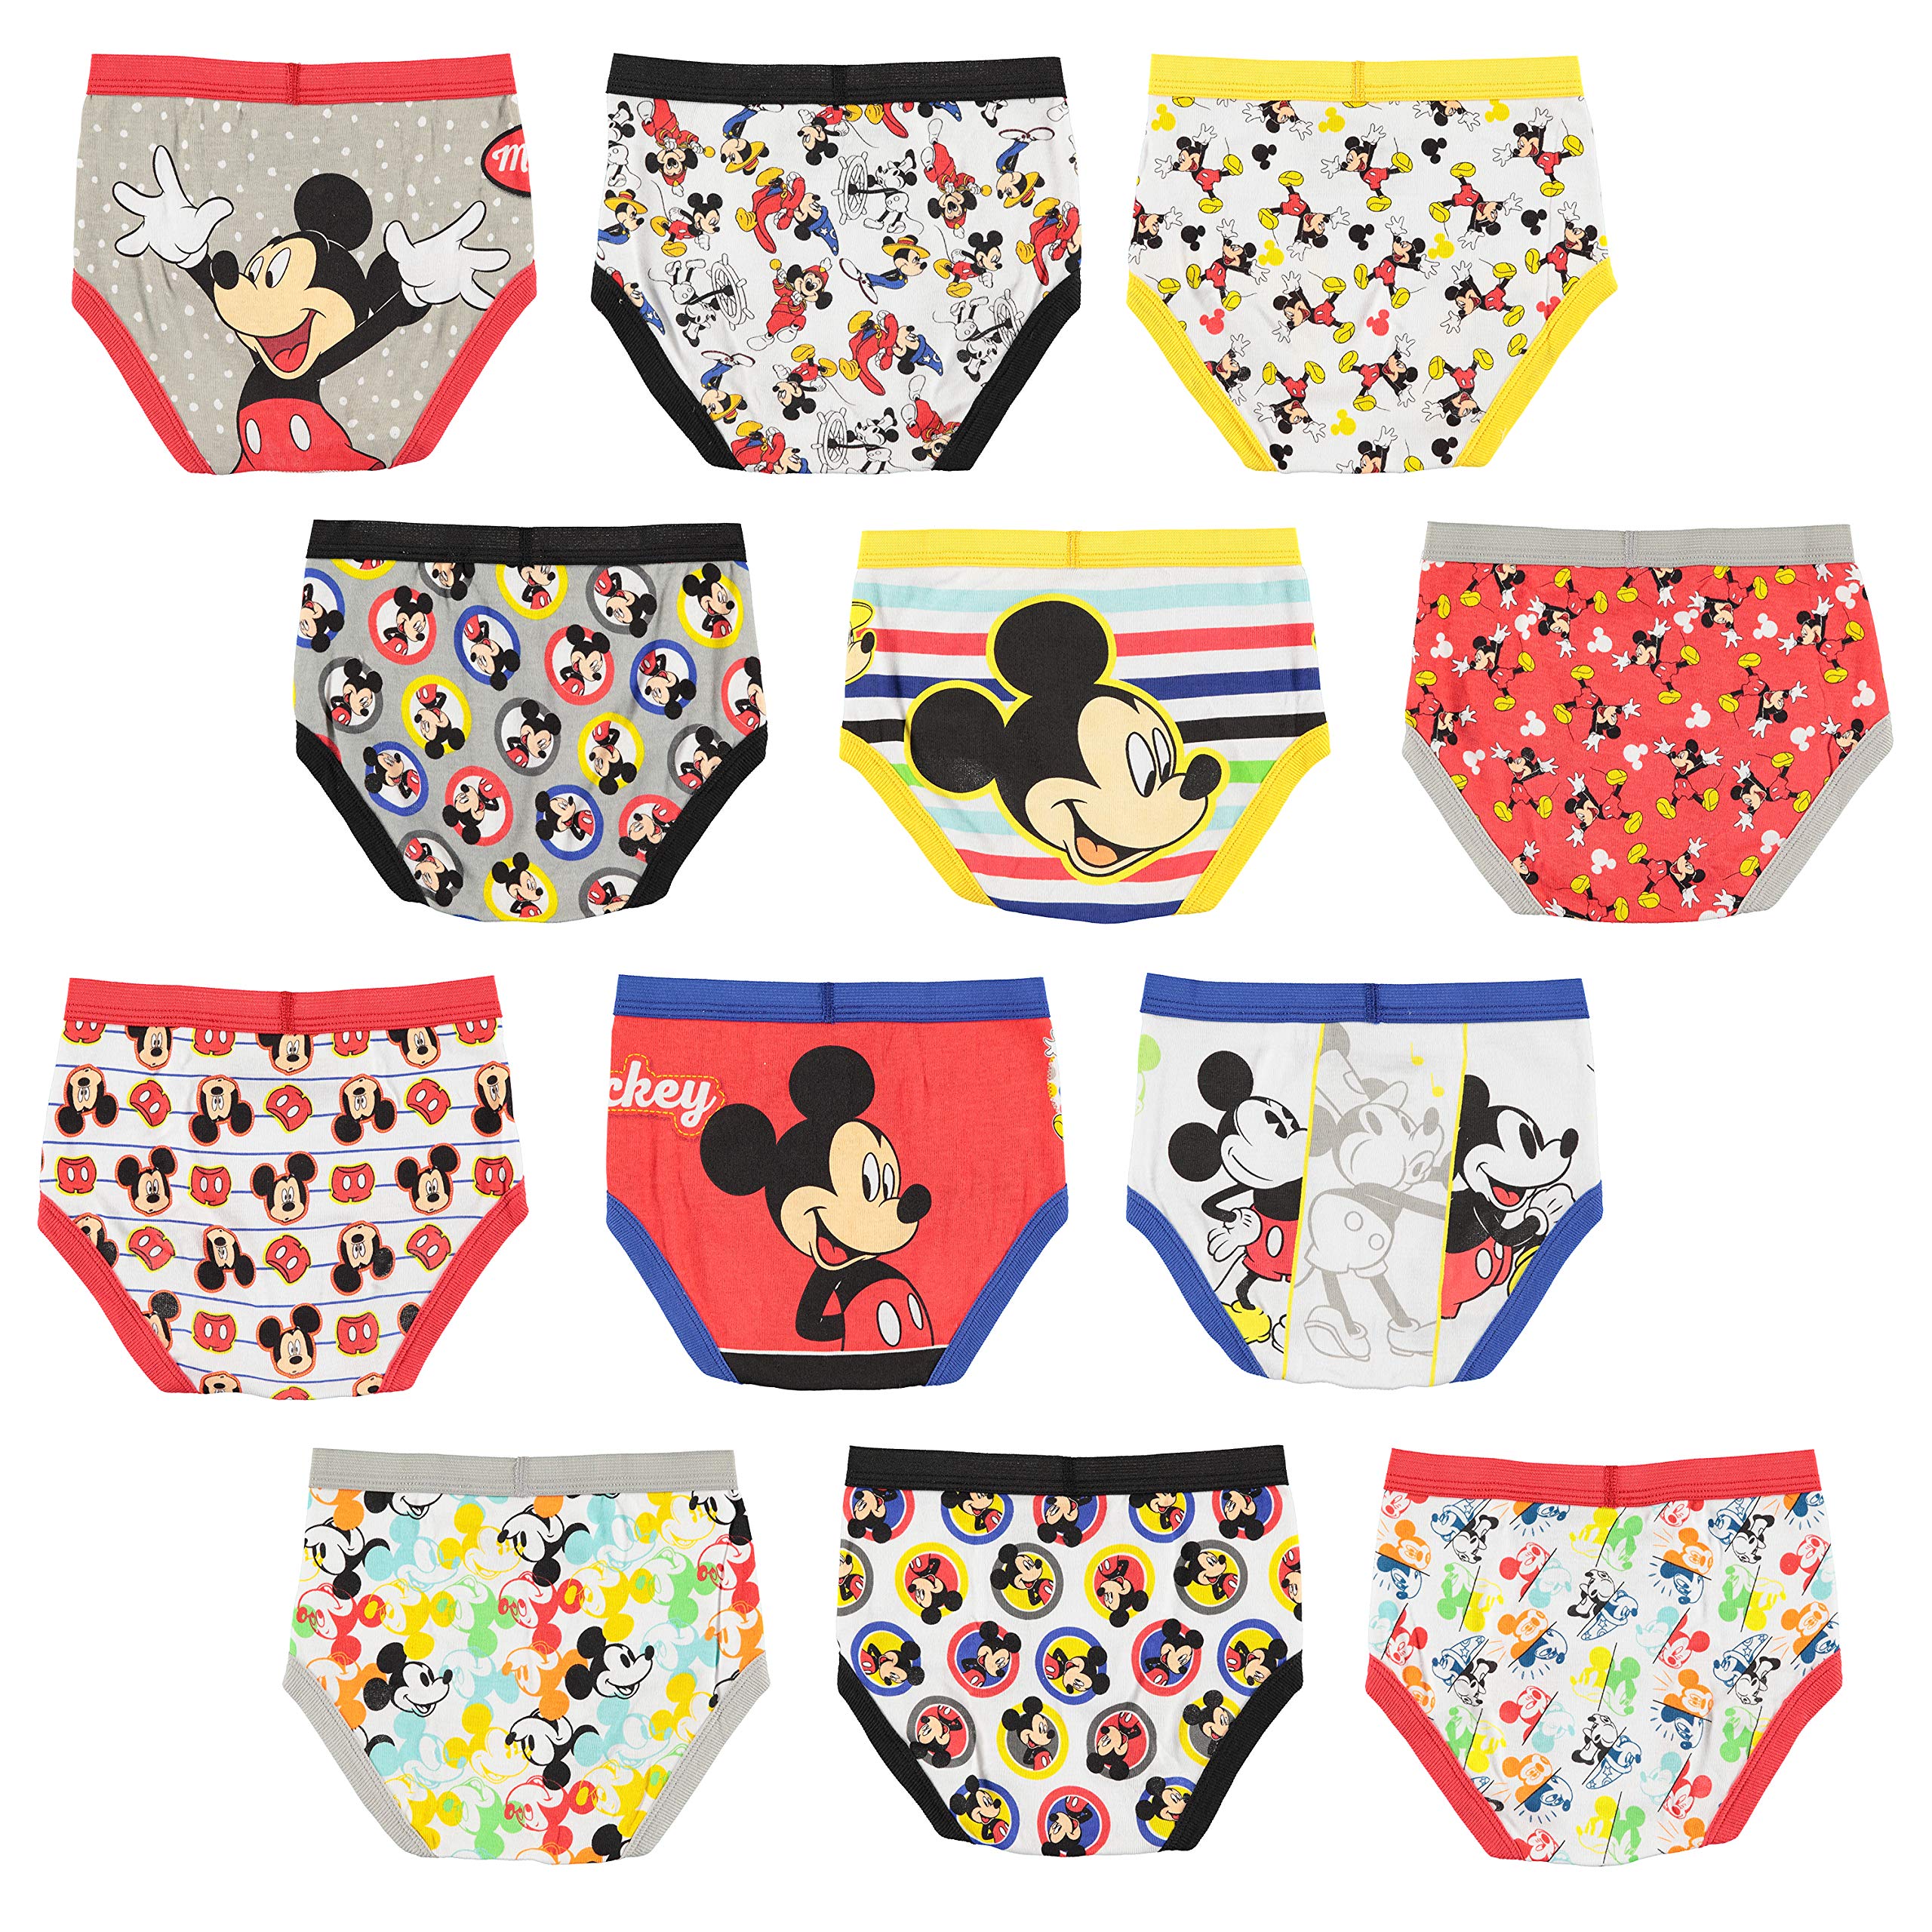 Disney Girls' Toddler Boys' Mickey Mouse 12-Days of Surprise Underwear Makes Potty Training Fun